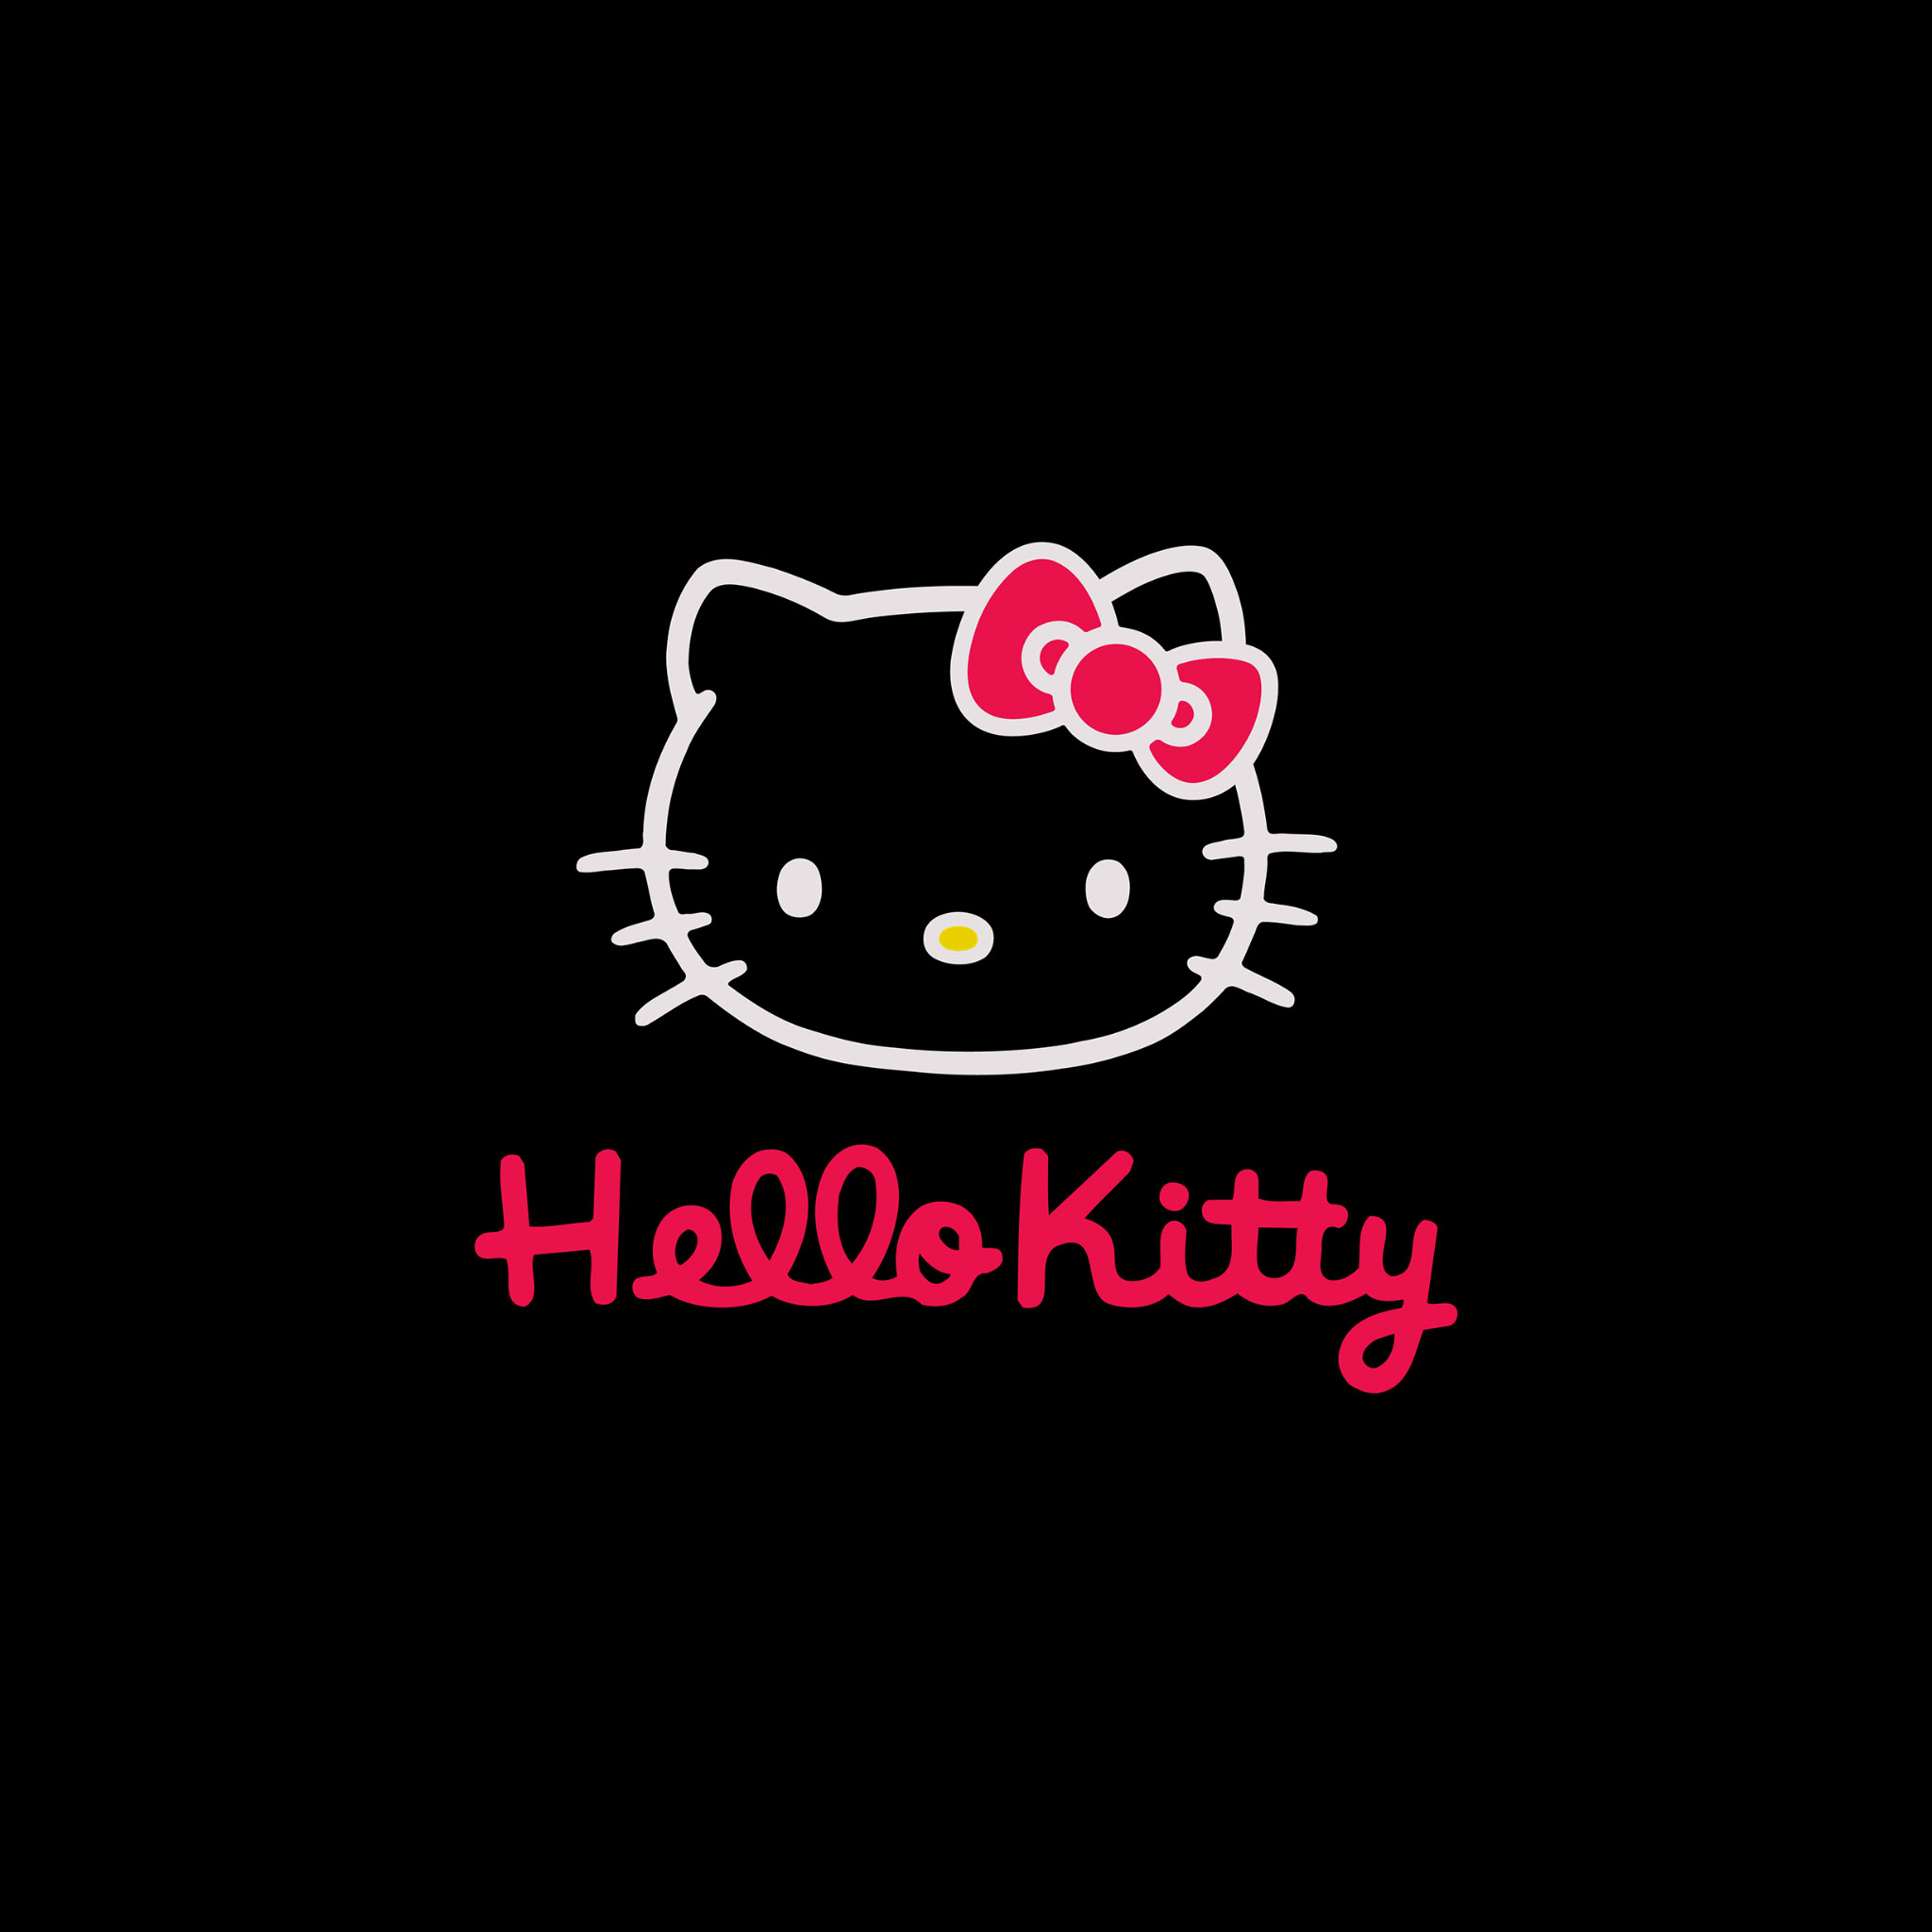 Ios7 Hello Kitty Dark Parallax HD iPhone iPad Wallpaper